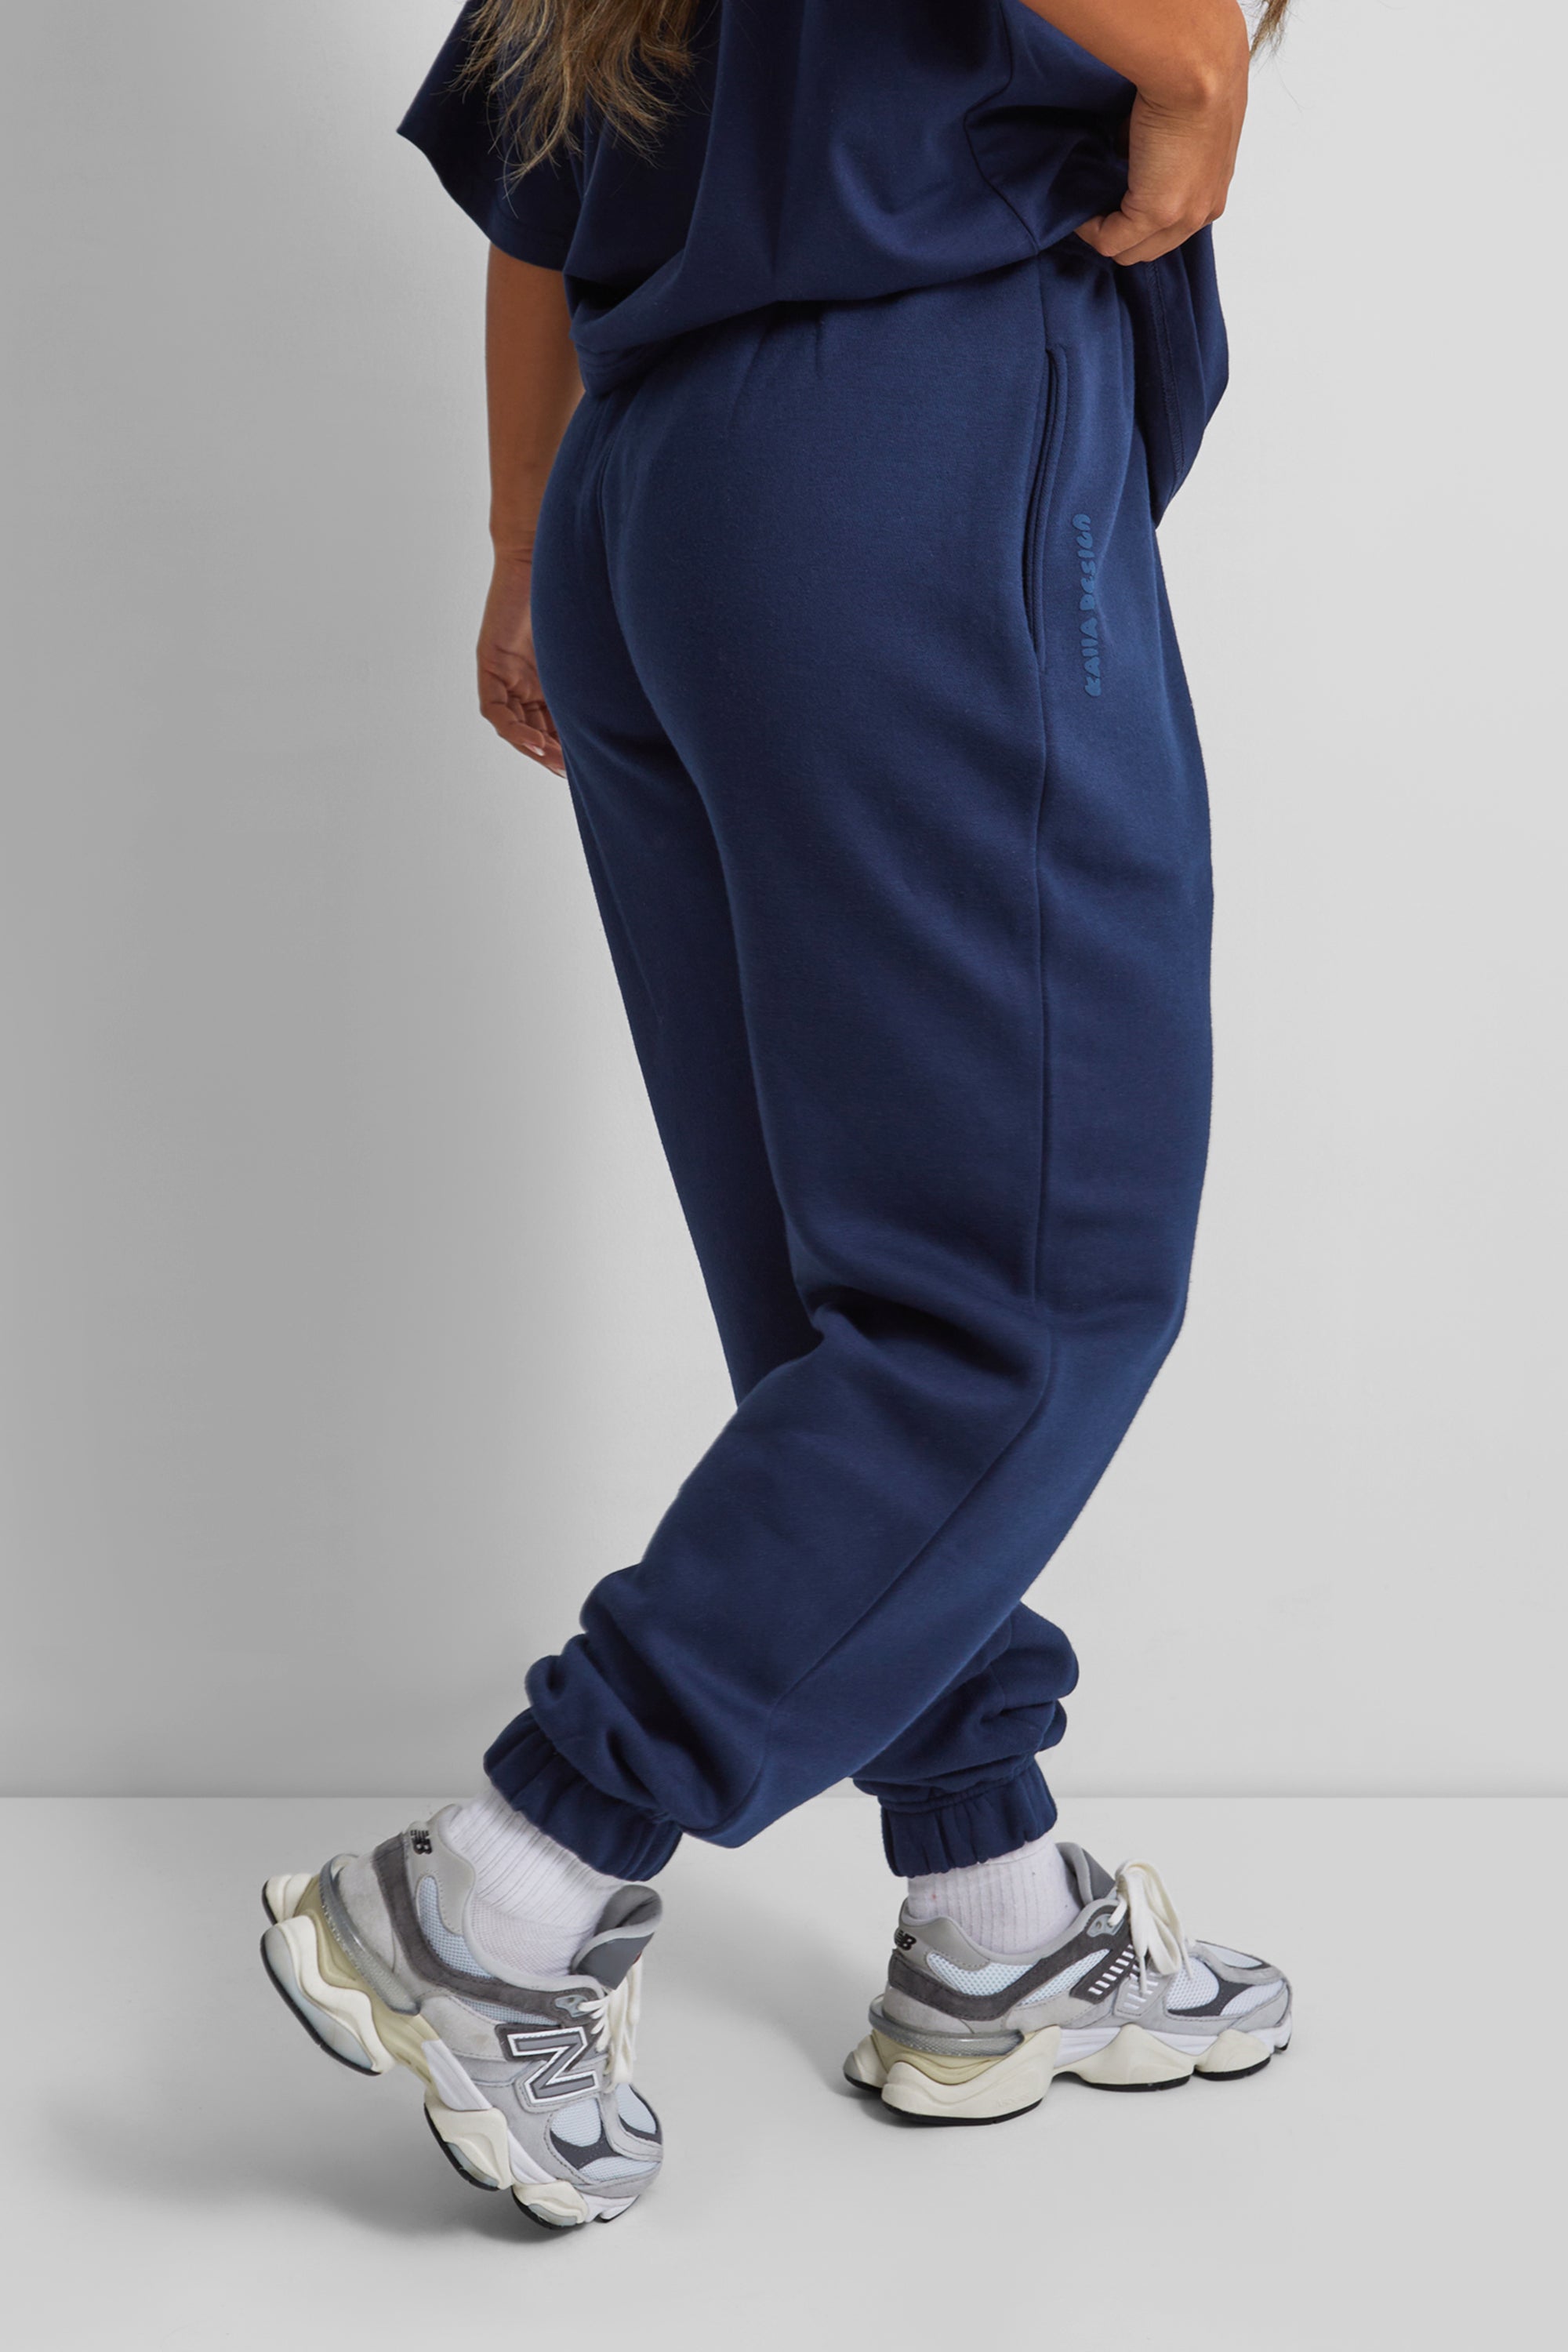 Buy Clovia Chic Basic Cuffed Joggers in Navy - Knit (XL) online